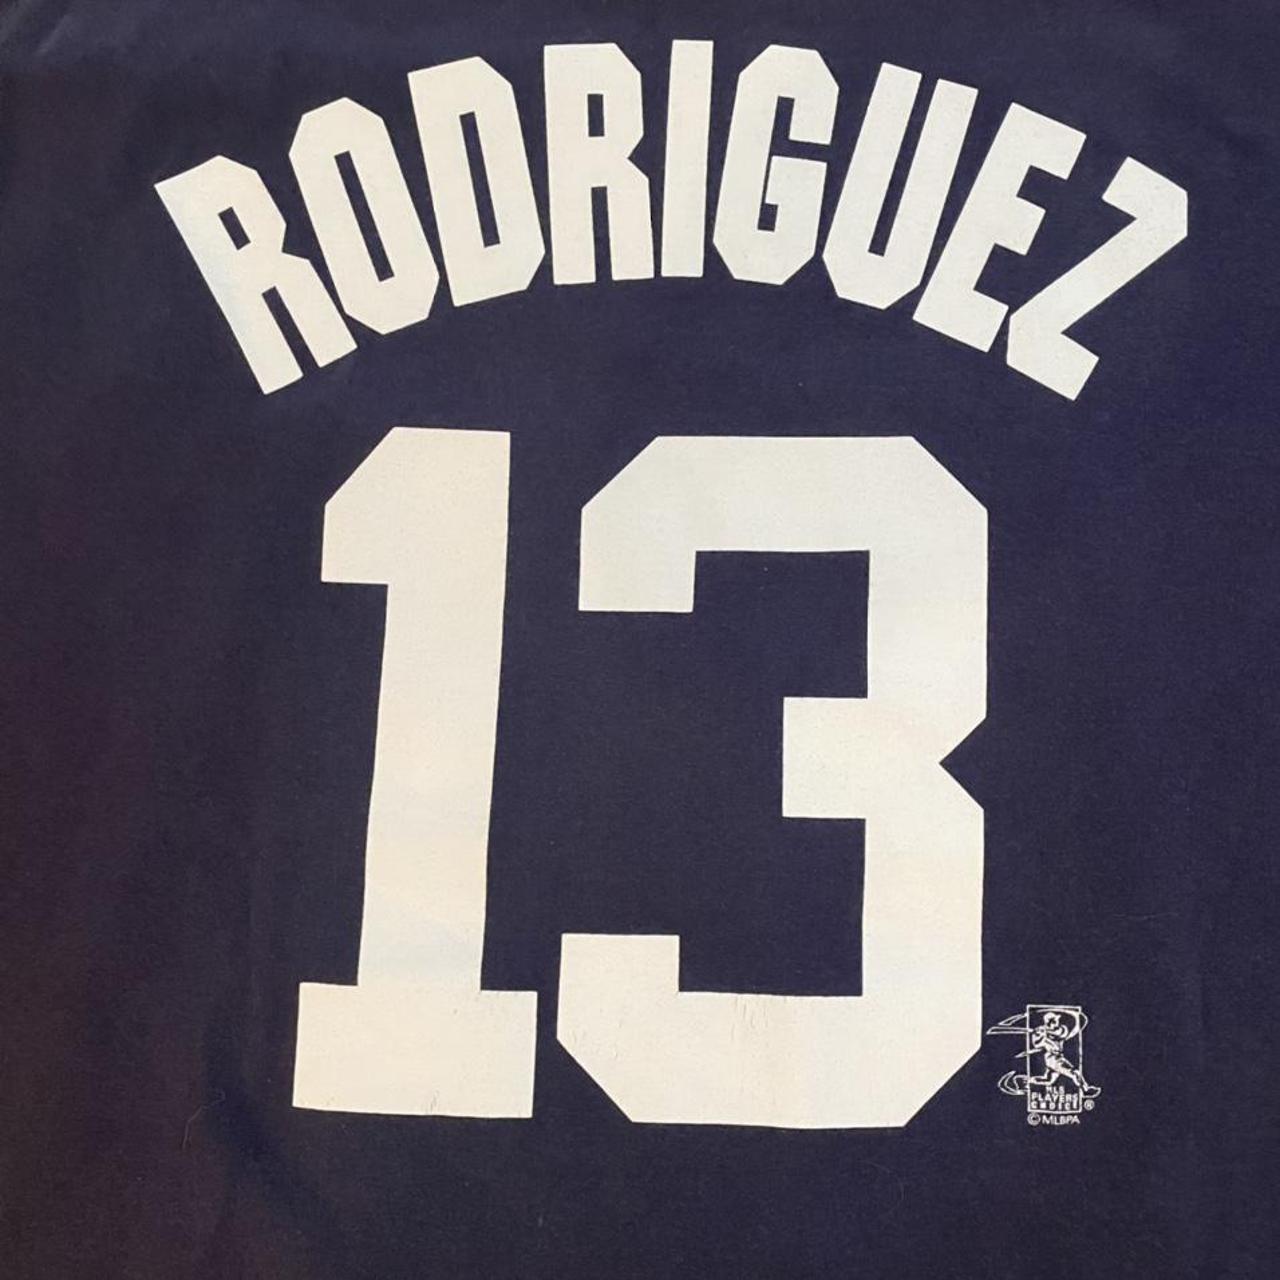 MLB Merchandise 2006 Alex Rodriguez Men's Small - Depop